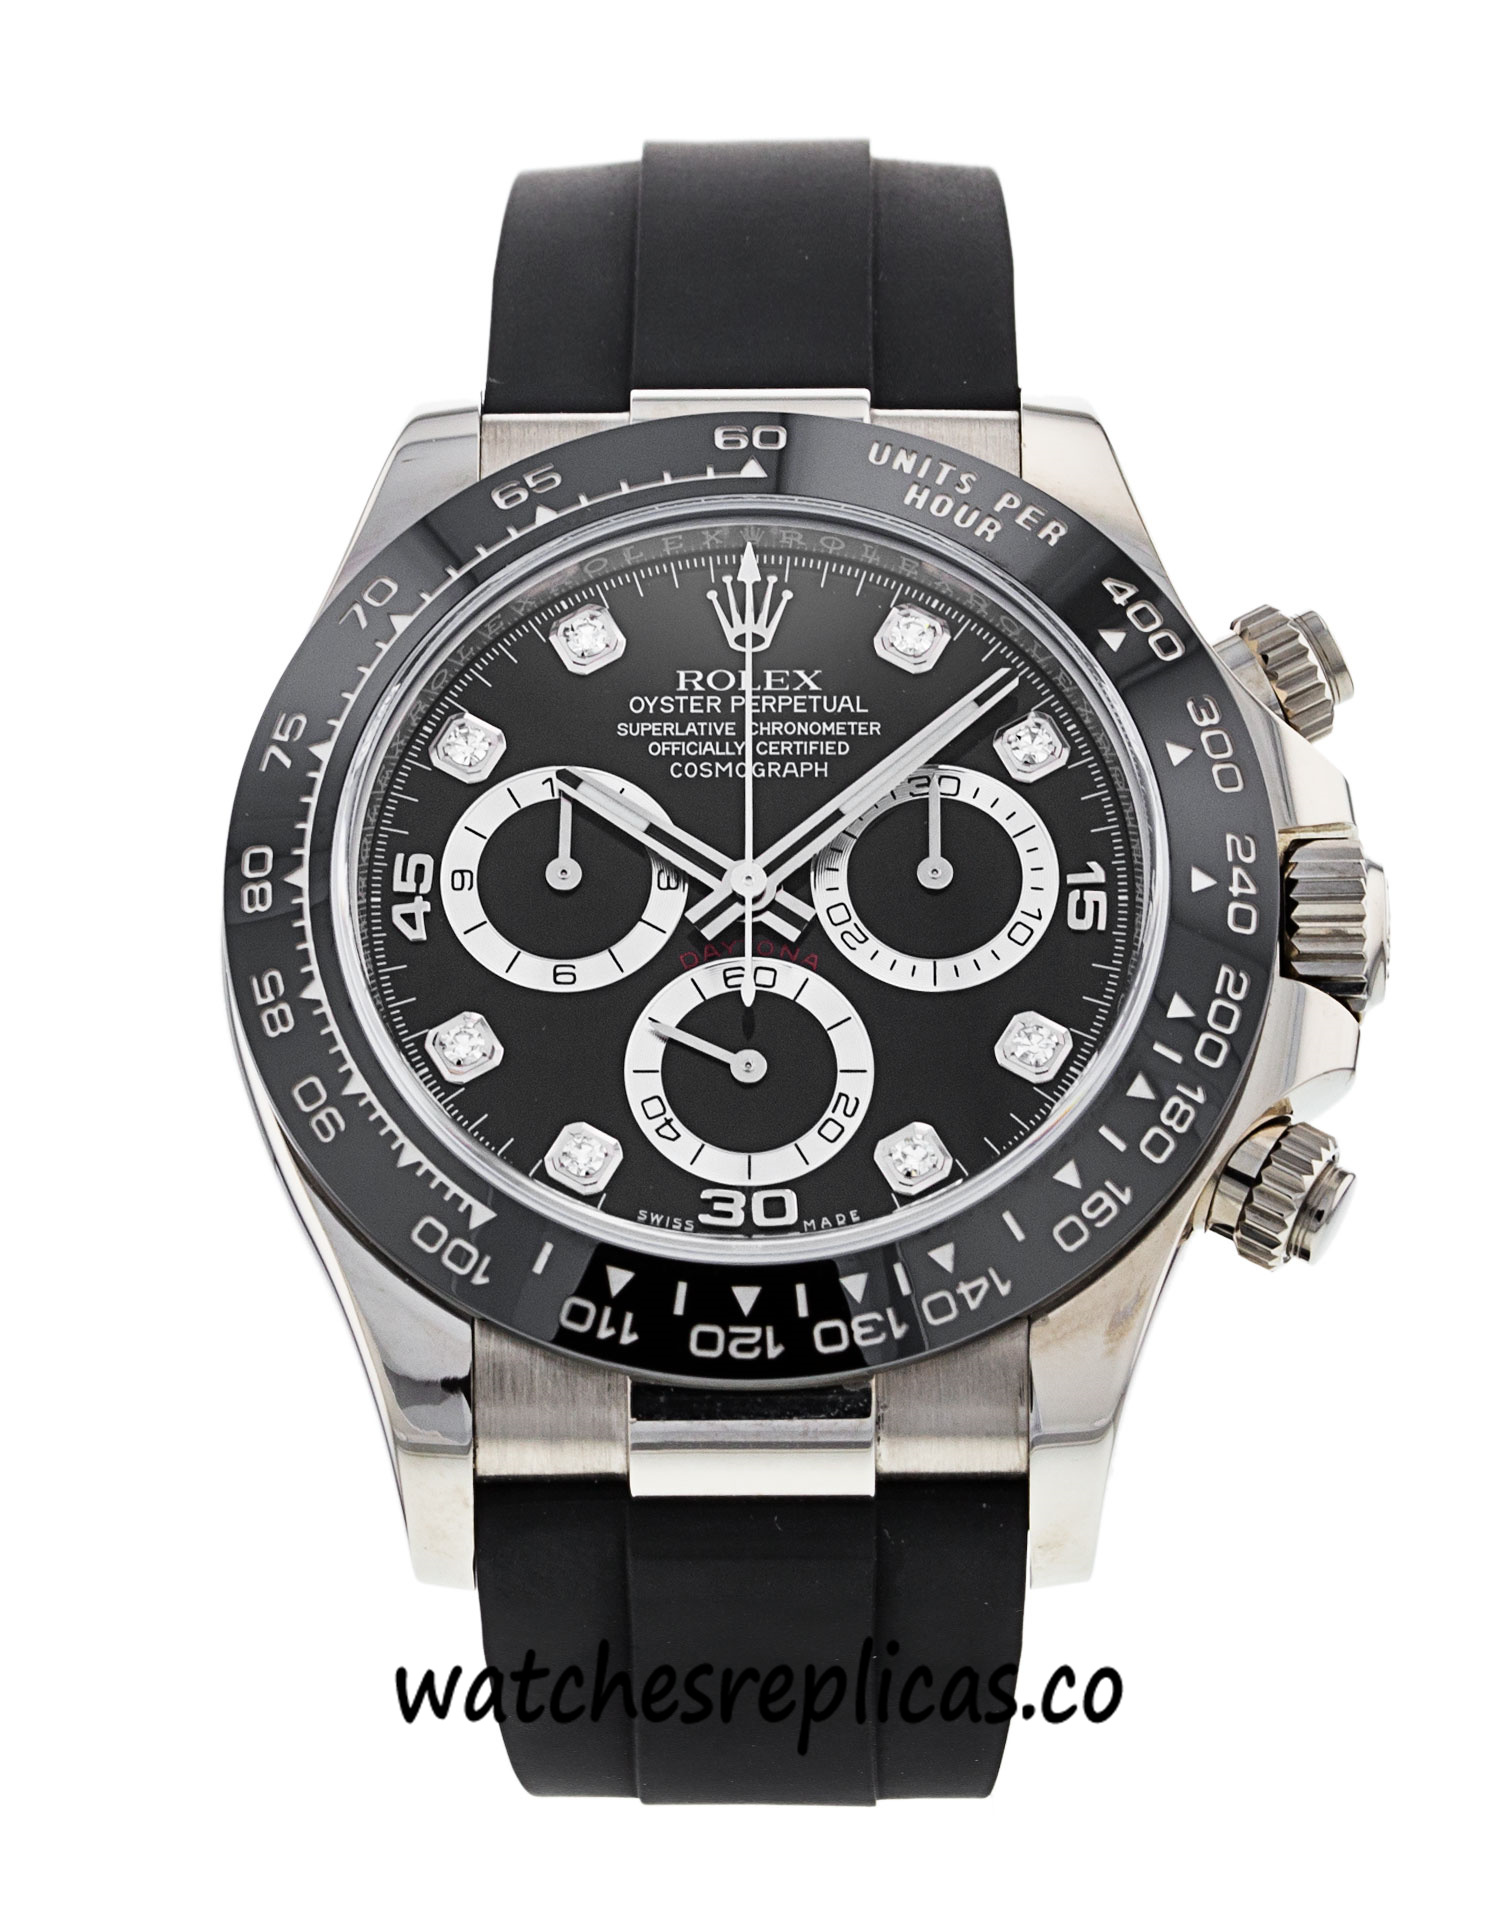 Mens Rolex Daytona 116519 LN (Black Diamond Dial) - watchesreplicas.co